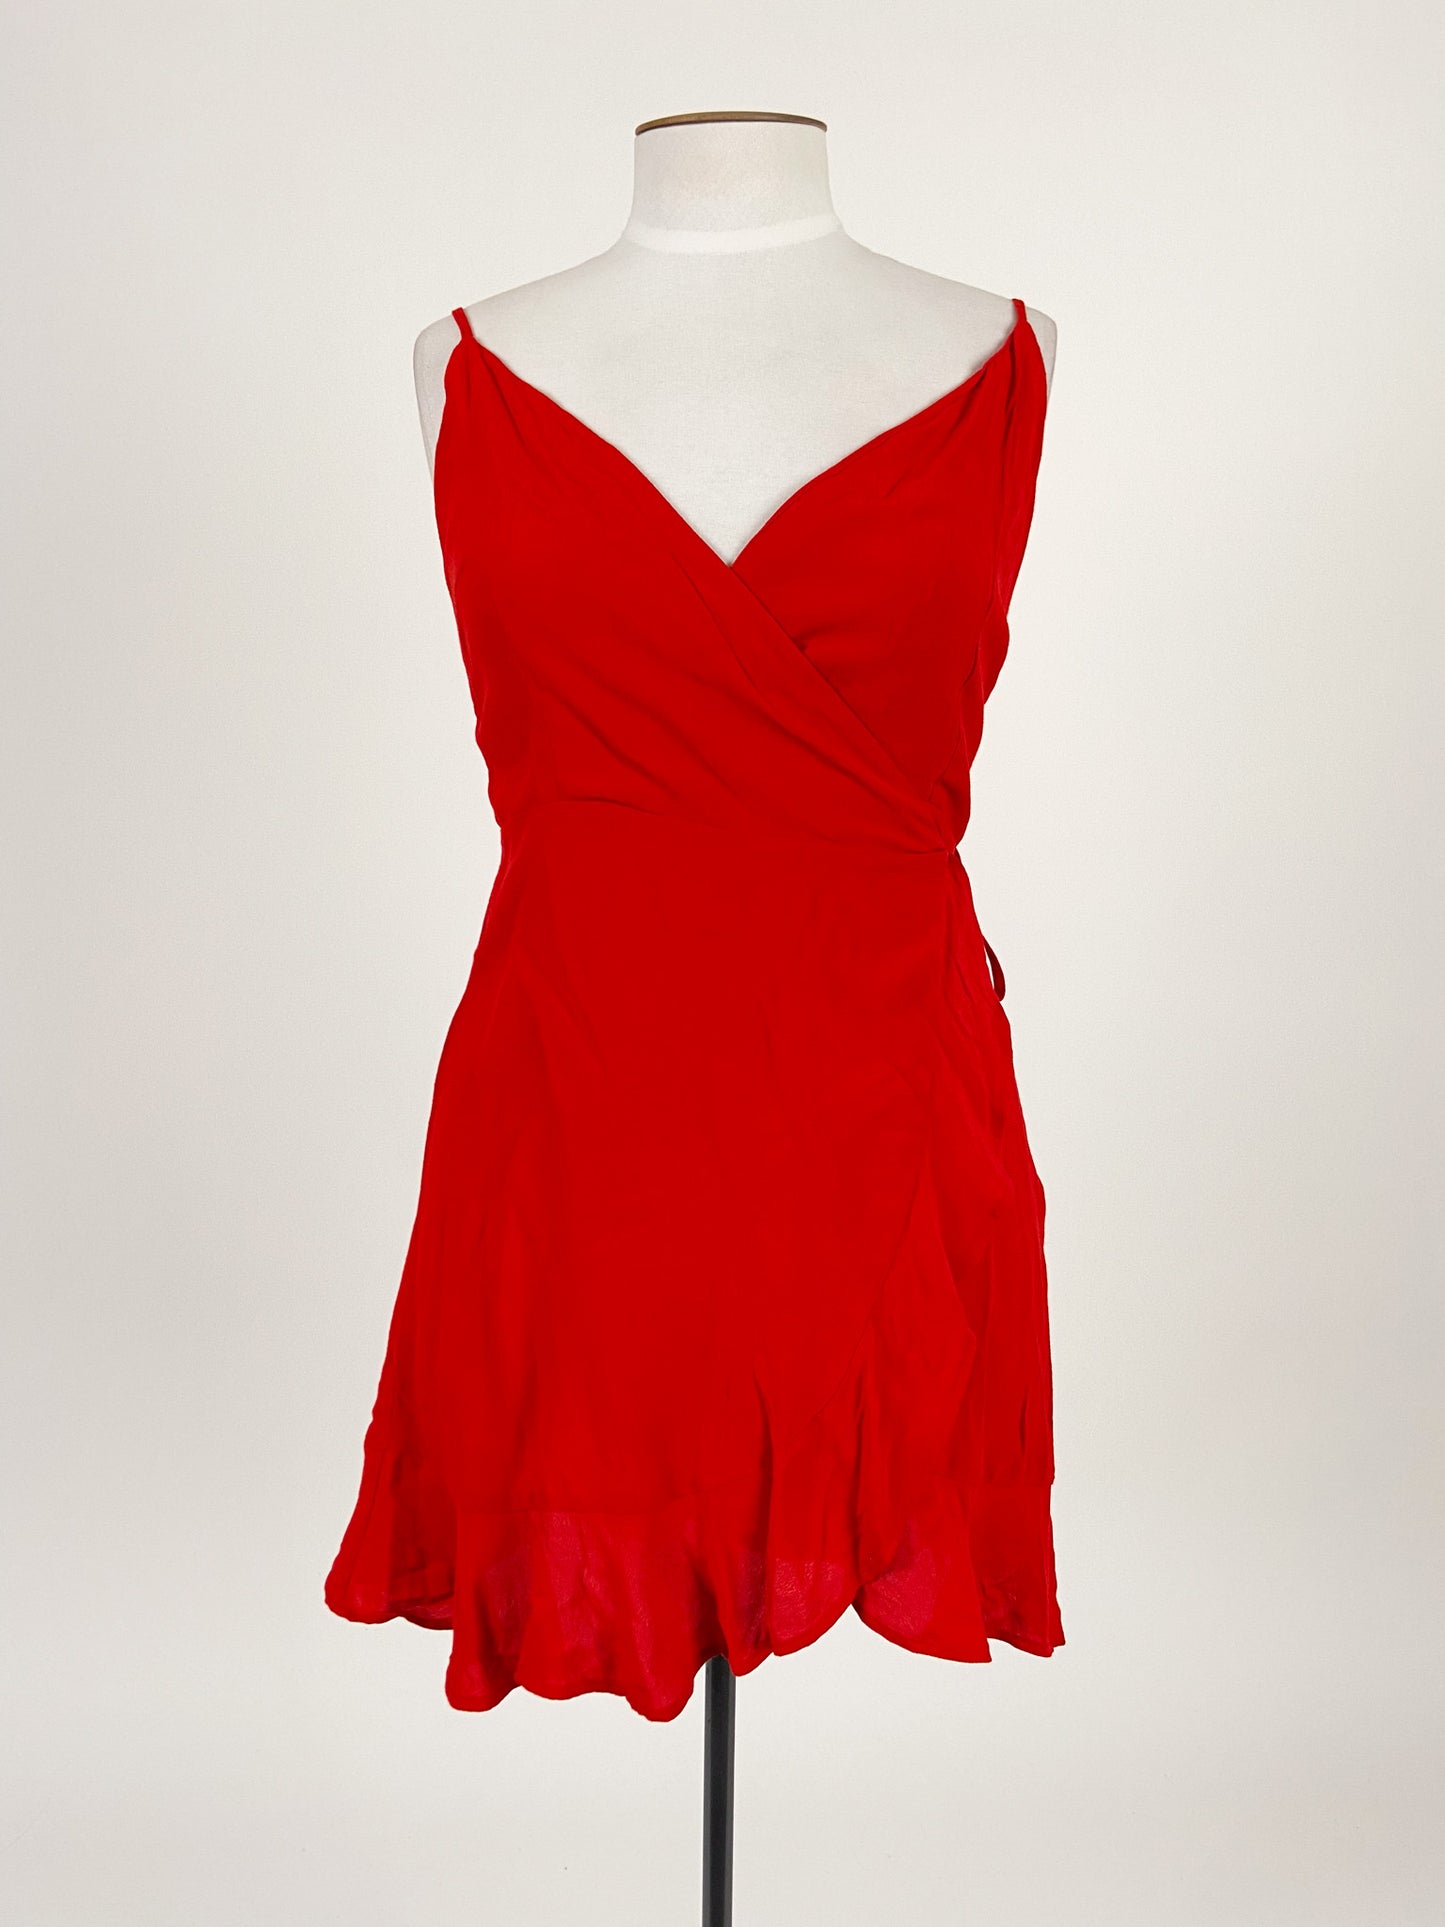 Bershka | Red Cocktail/Formal Dress | Size M